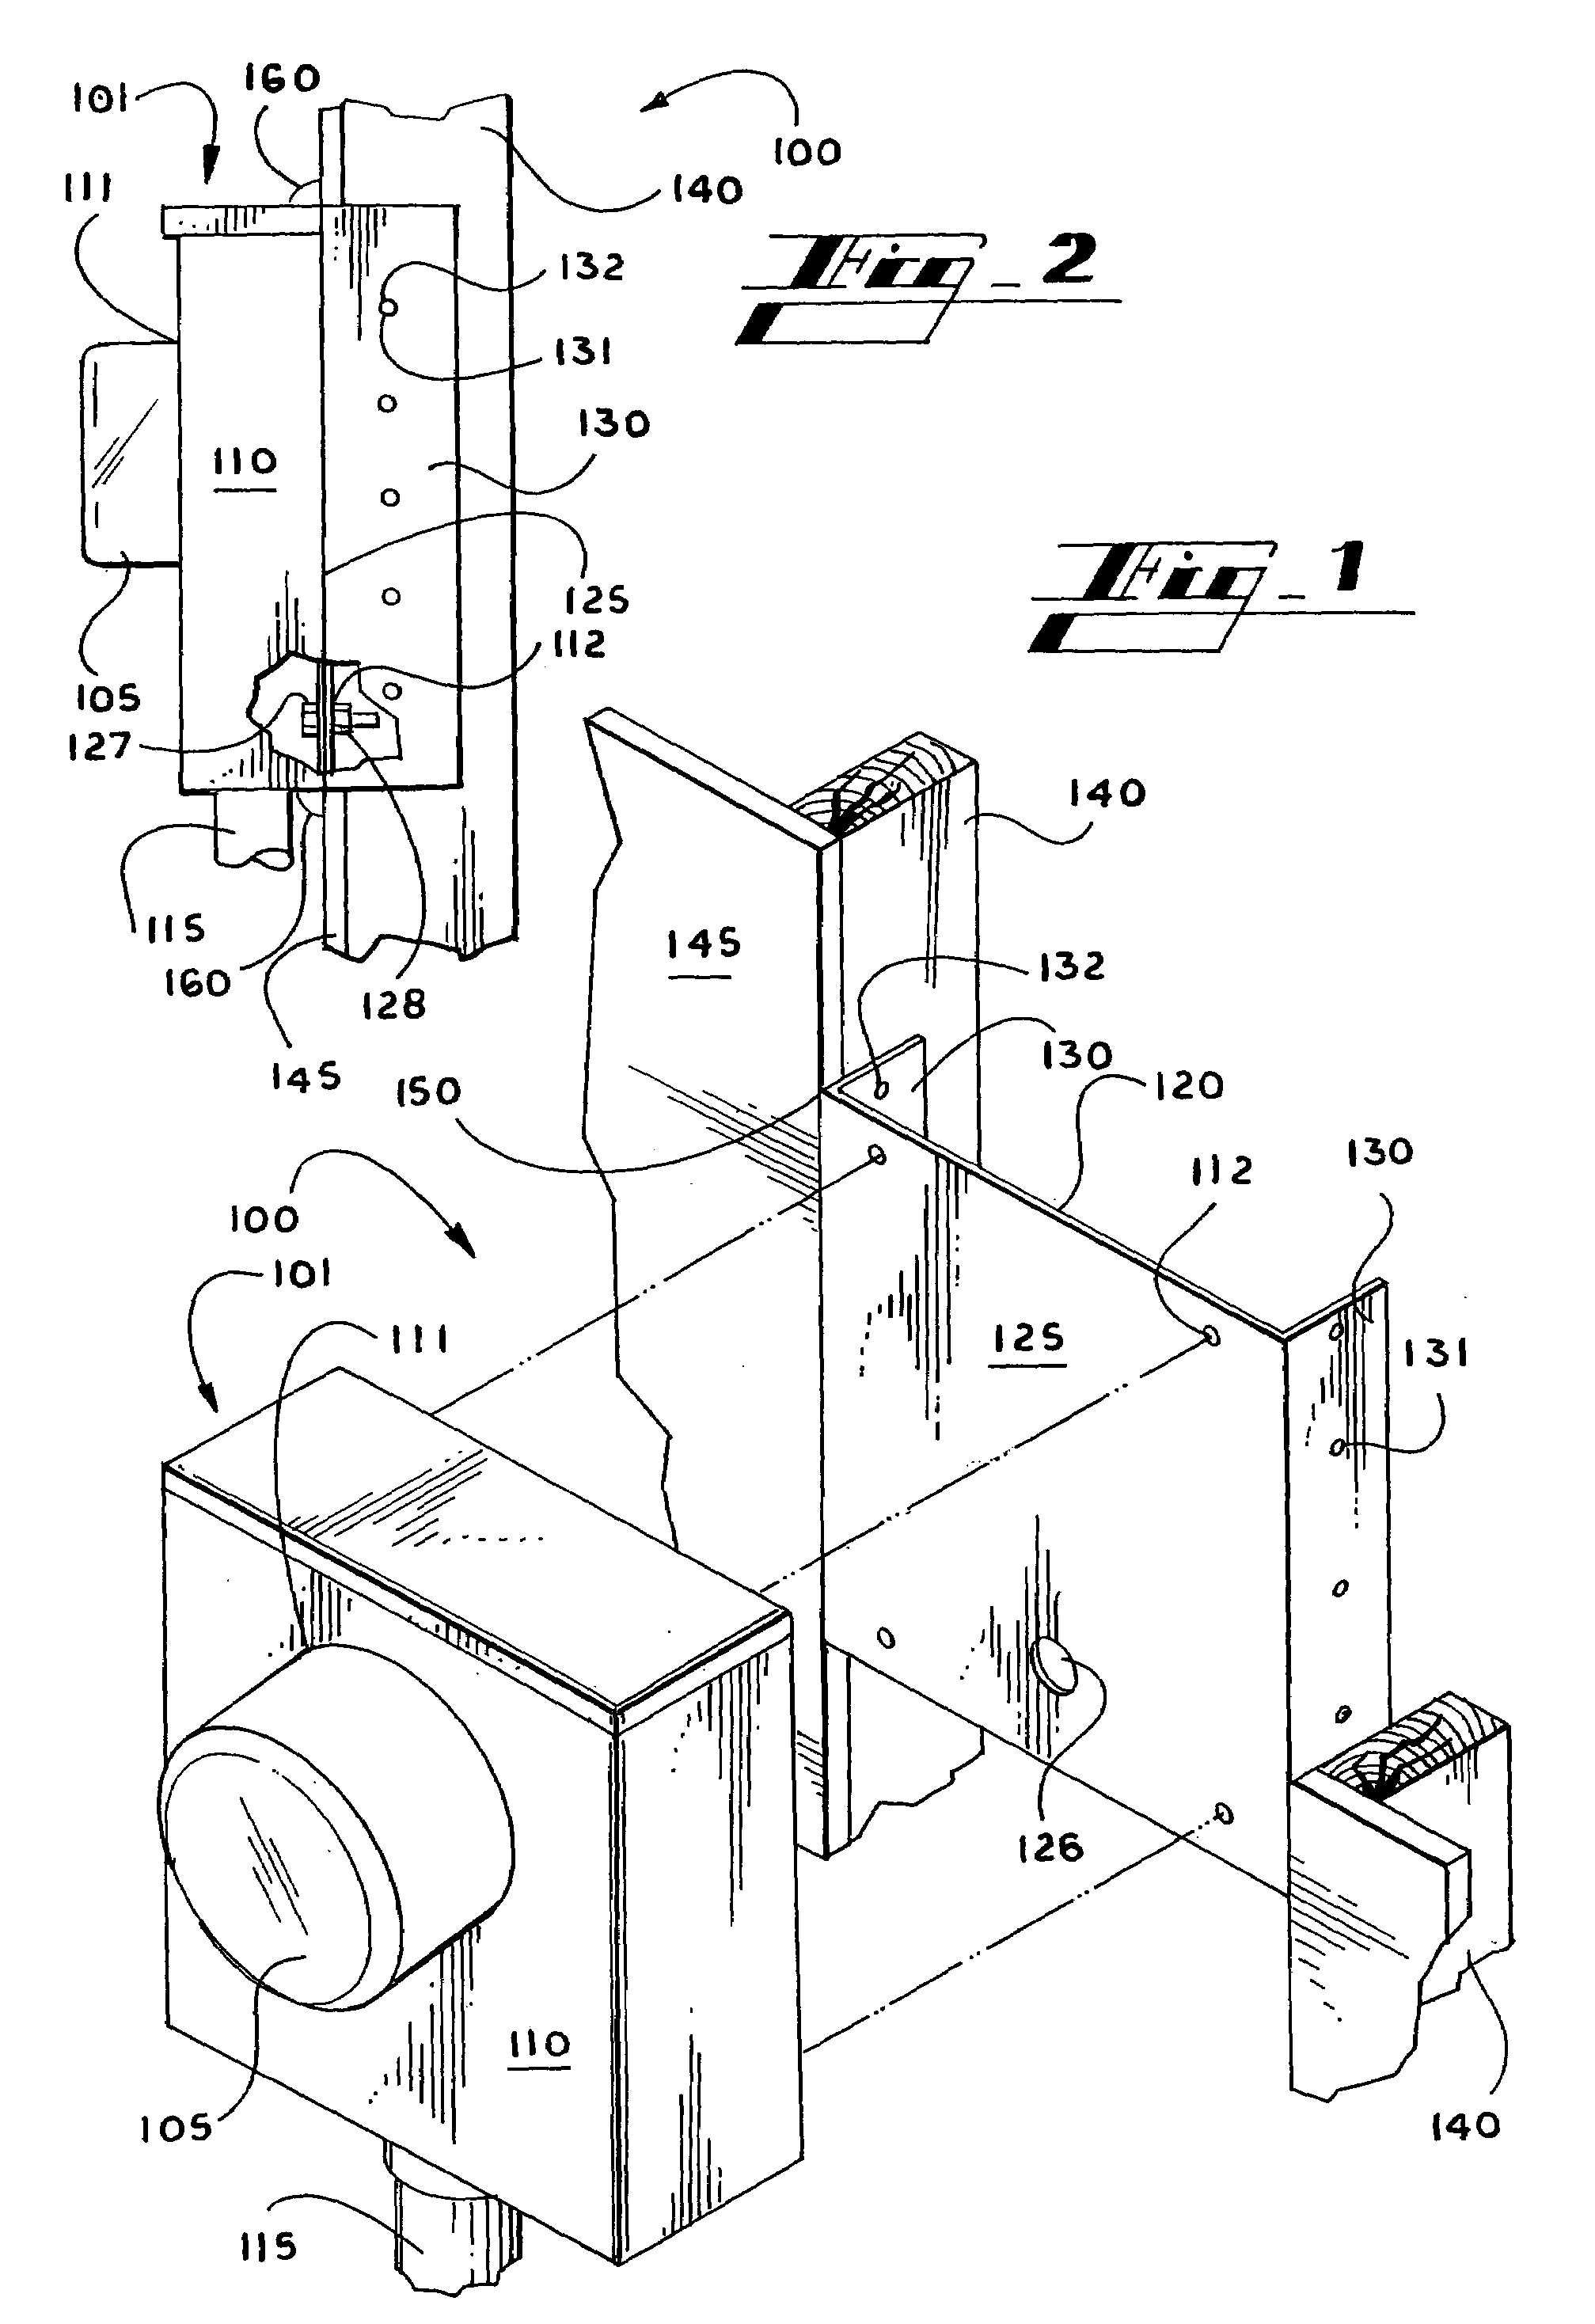 Meter base bracket apparatus and system